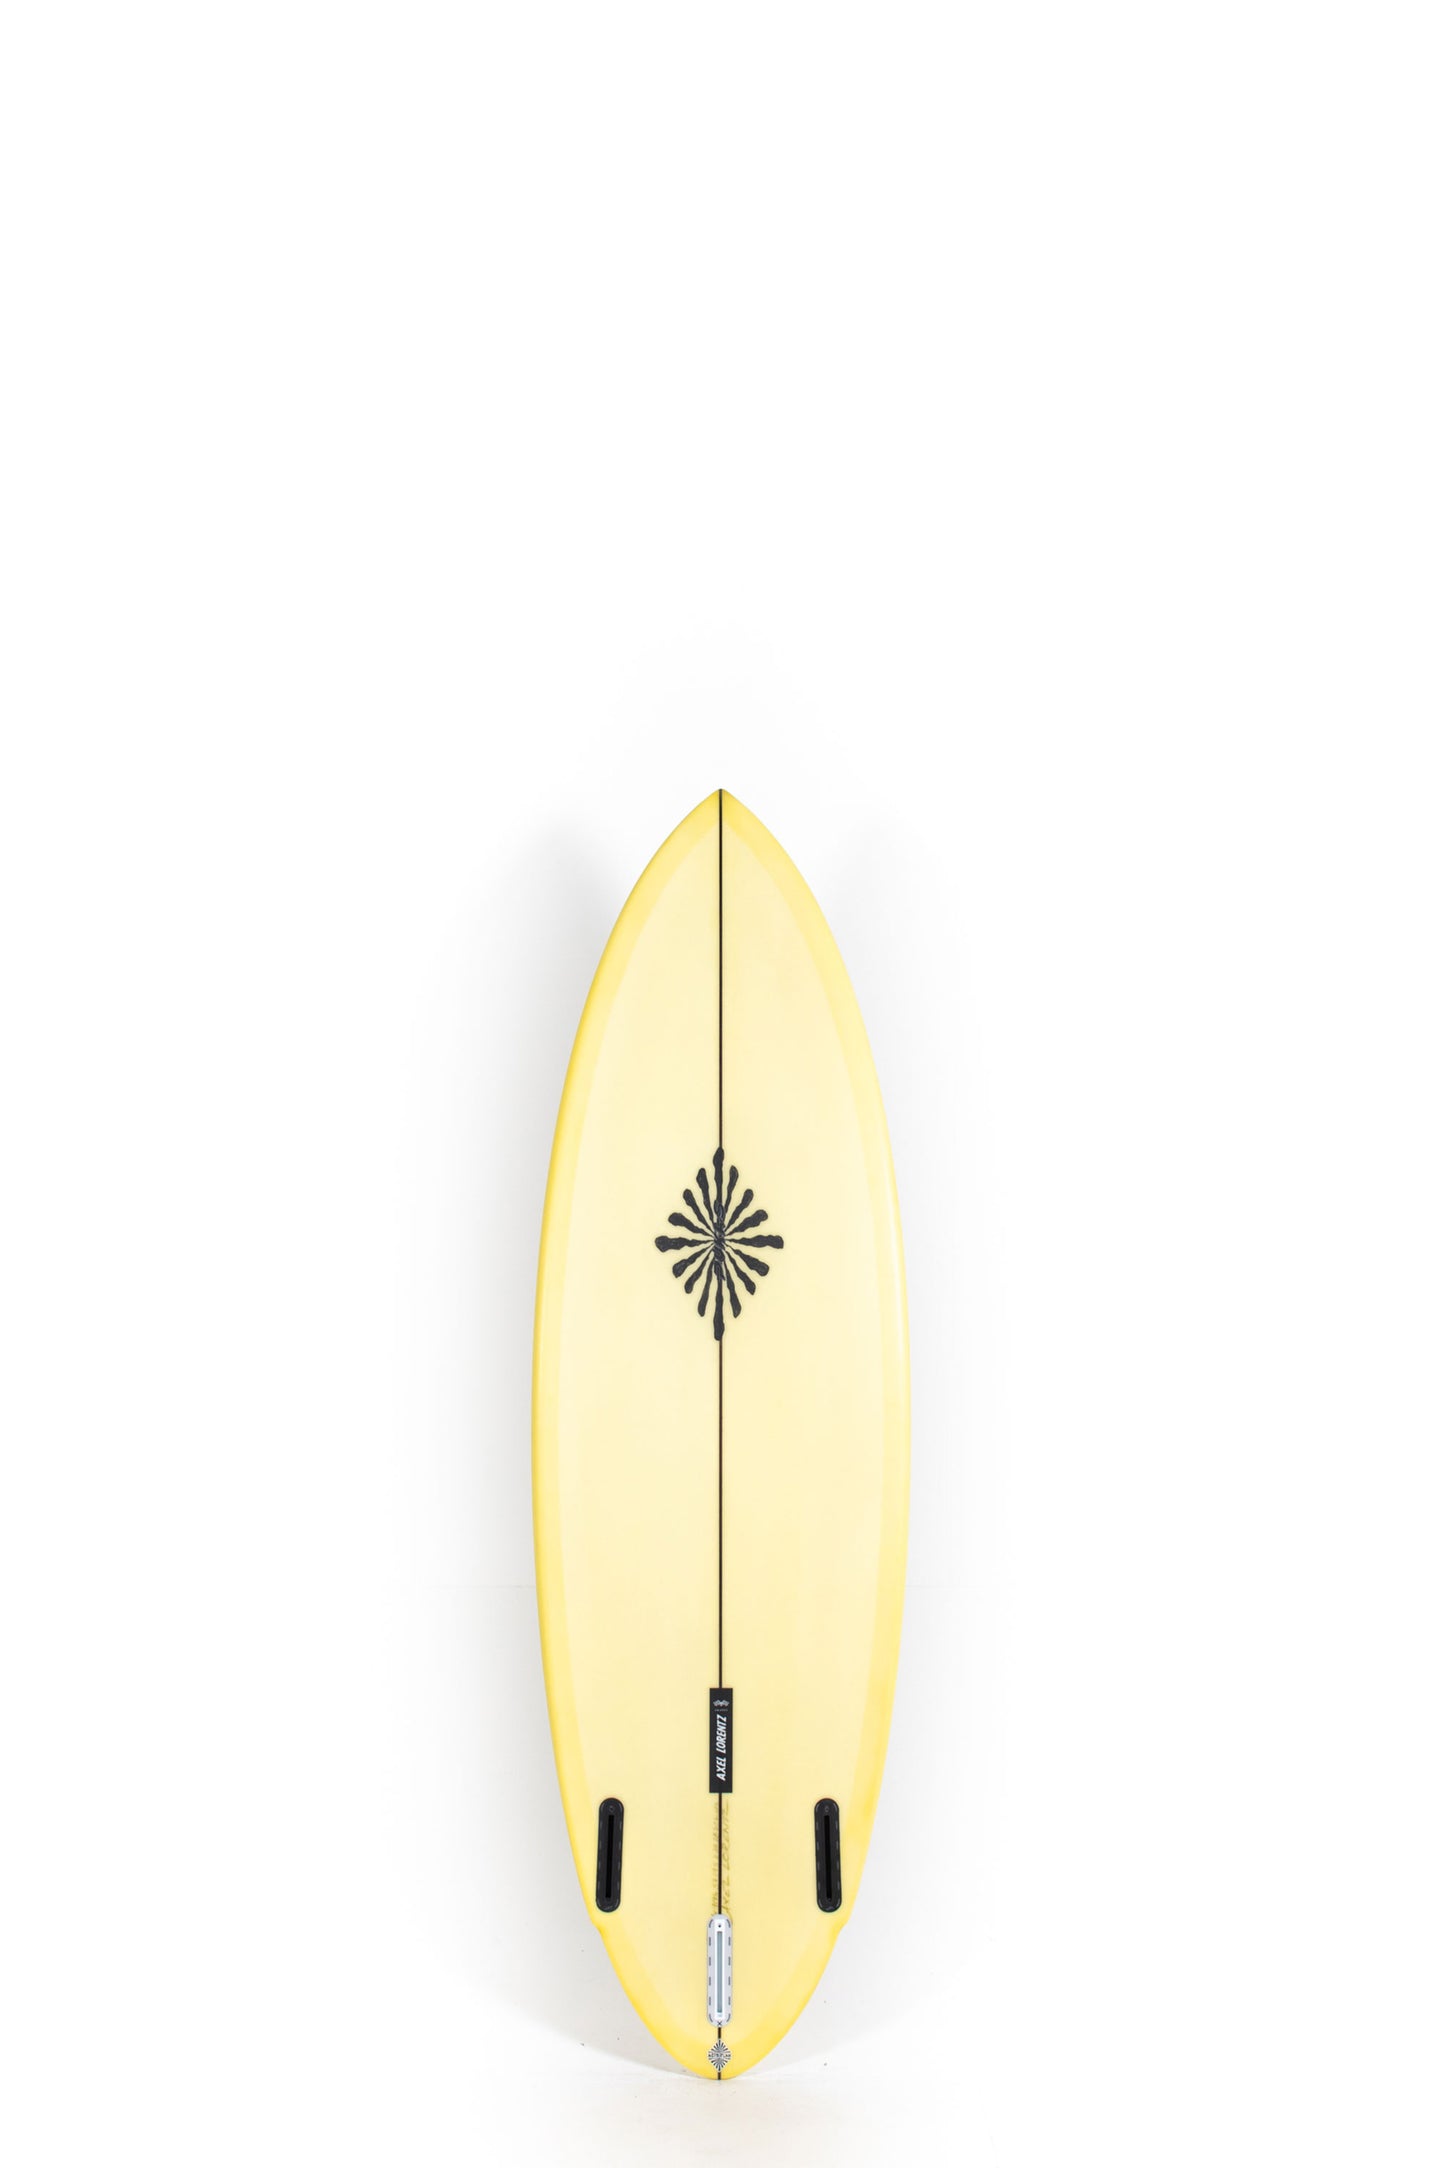 Pukas Surf Shop - Pukas Surfboards - ACID PLAN by Axel Lorentz - 5'7" x 19,5 x 2,36 x 28,25L - AX09194